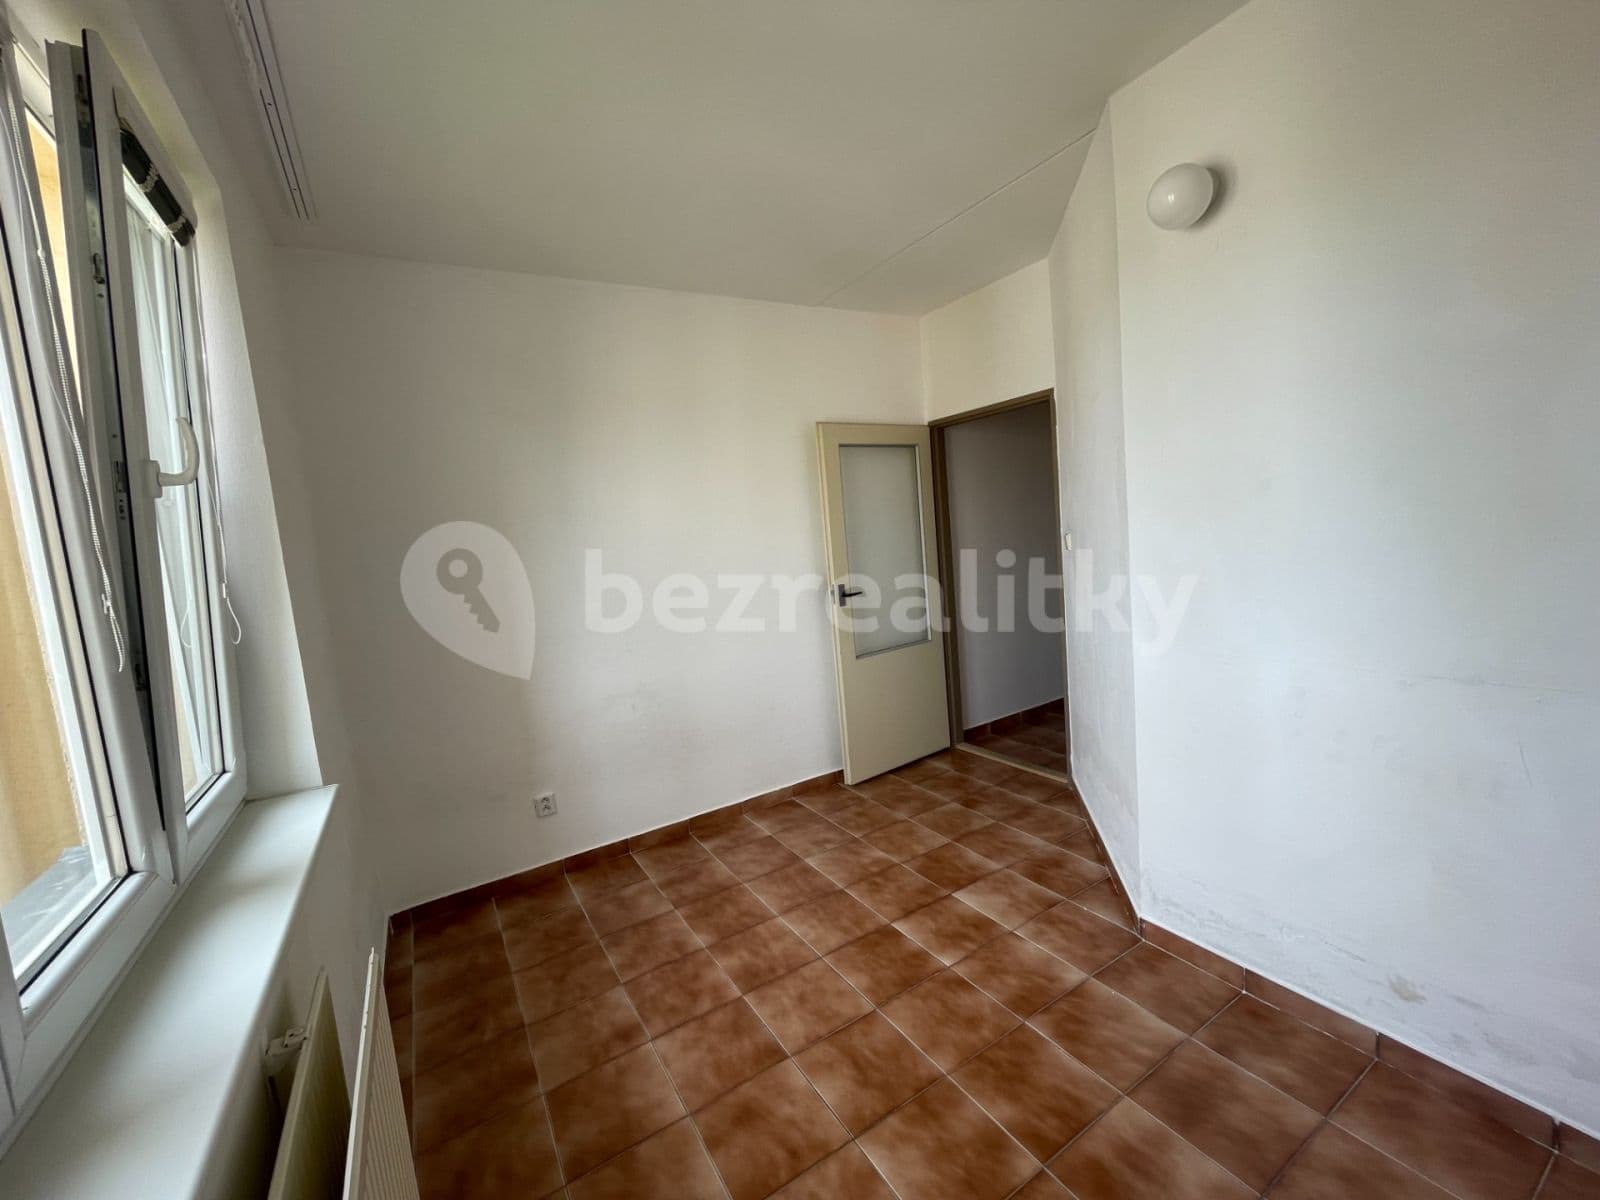 Predaj bytu 4-izbový 85 m², Sídliště Míru, Pacov, Kraj Vysočina